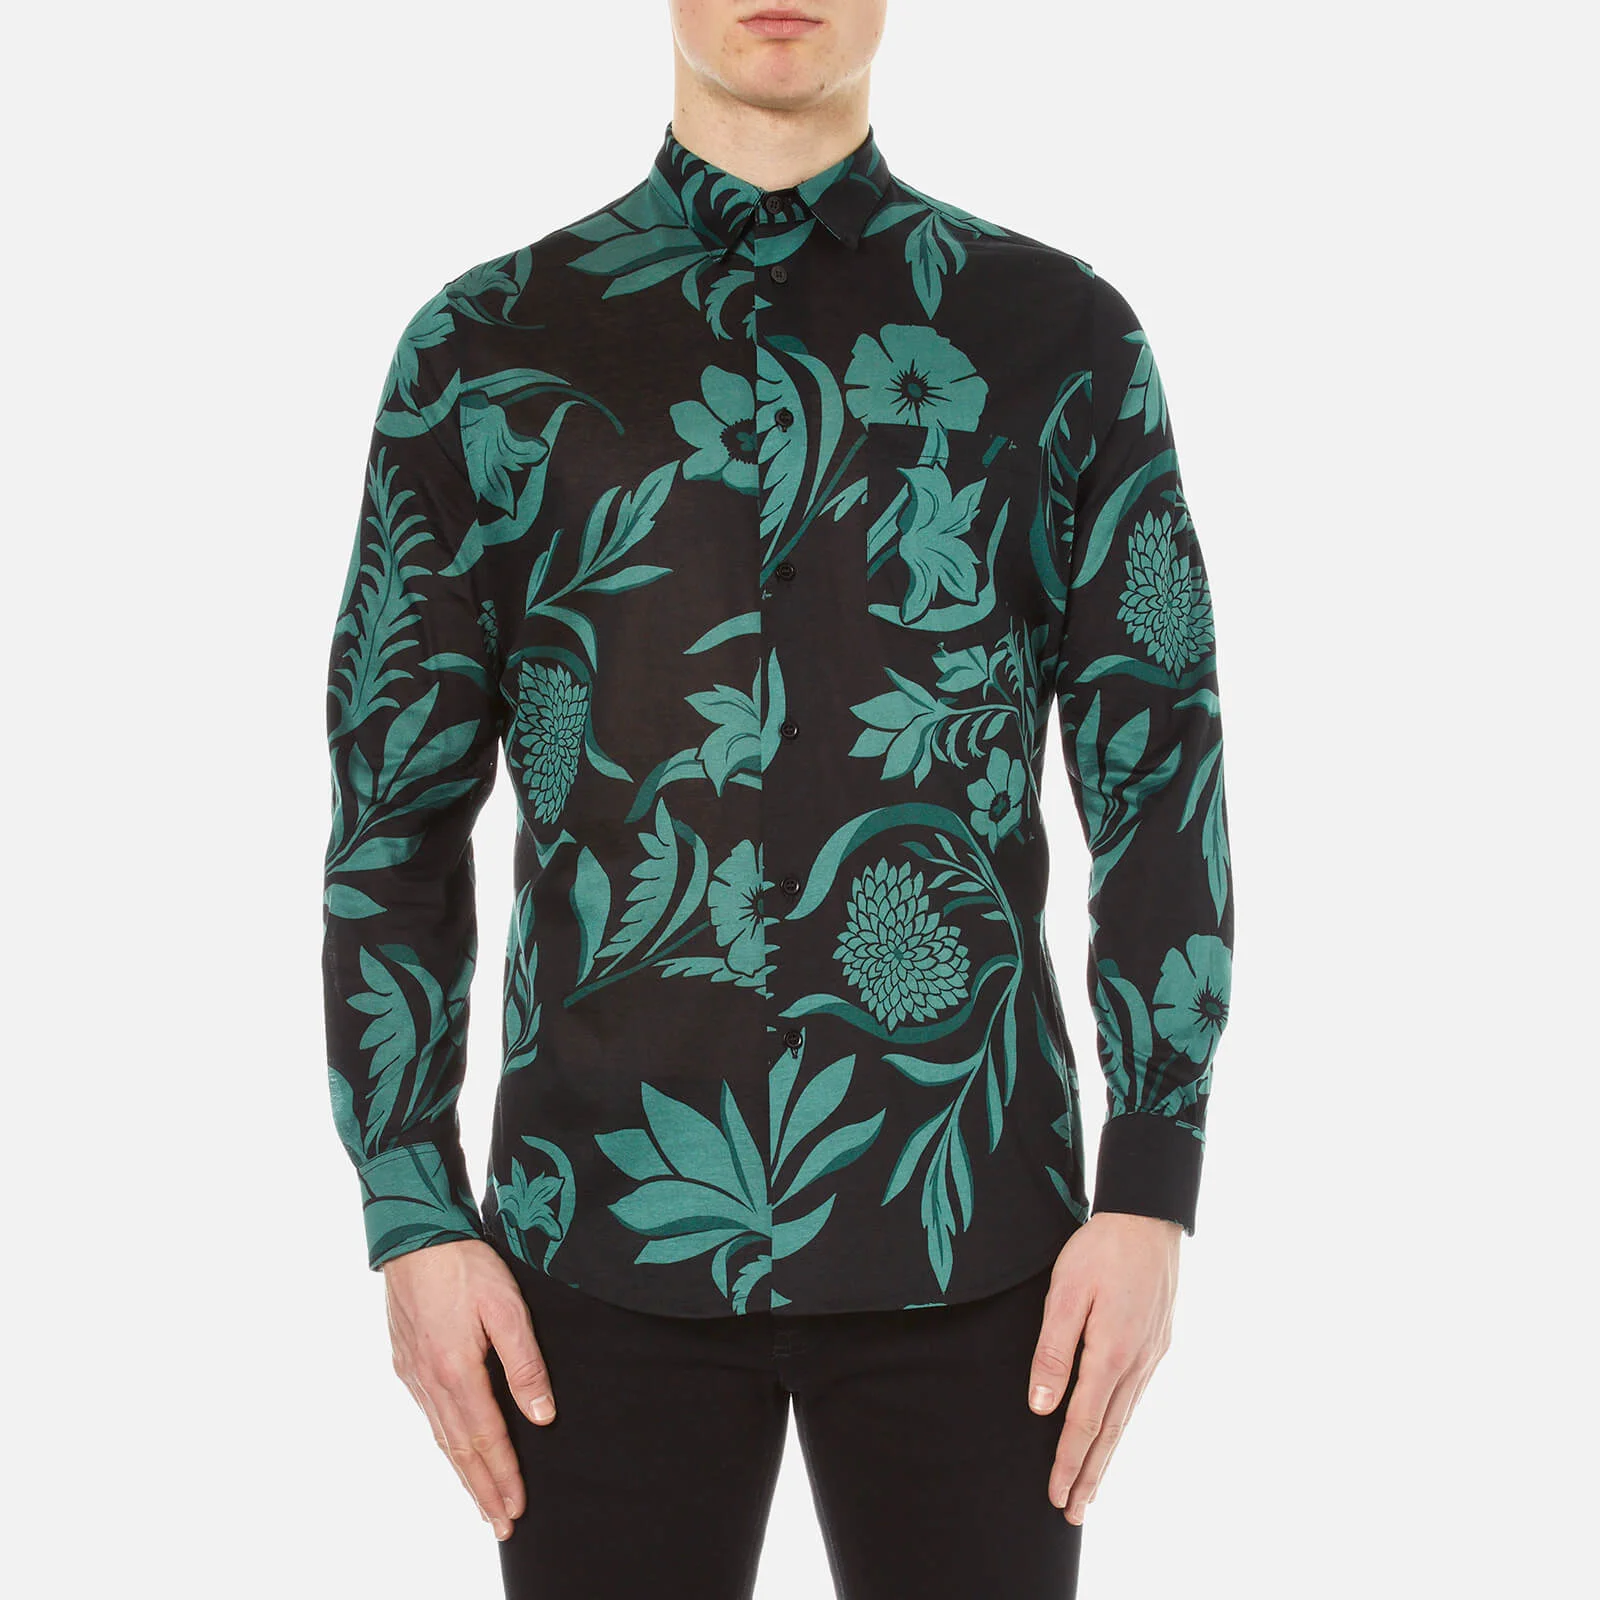 AMI Men's Flowers Printed Jersey Shirt - Black/Green Image 1